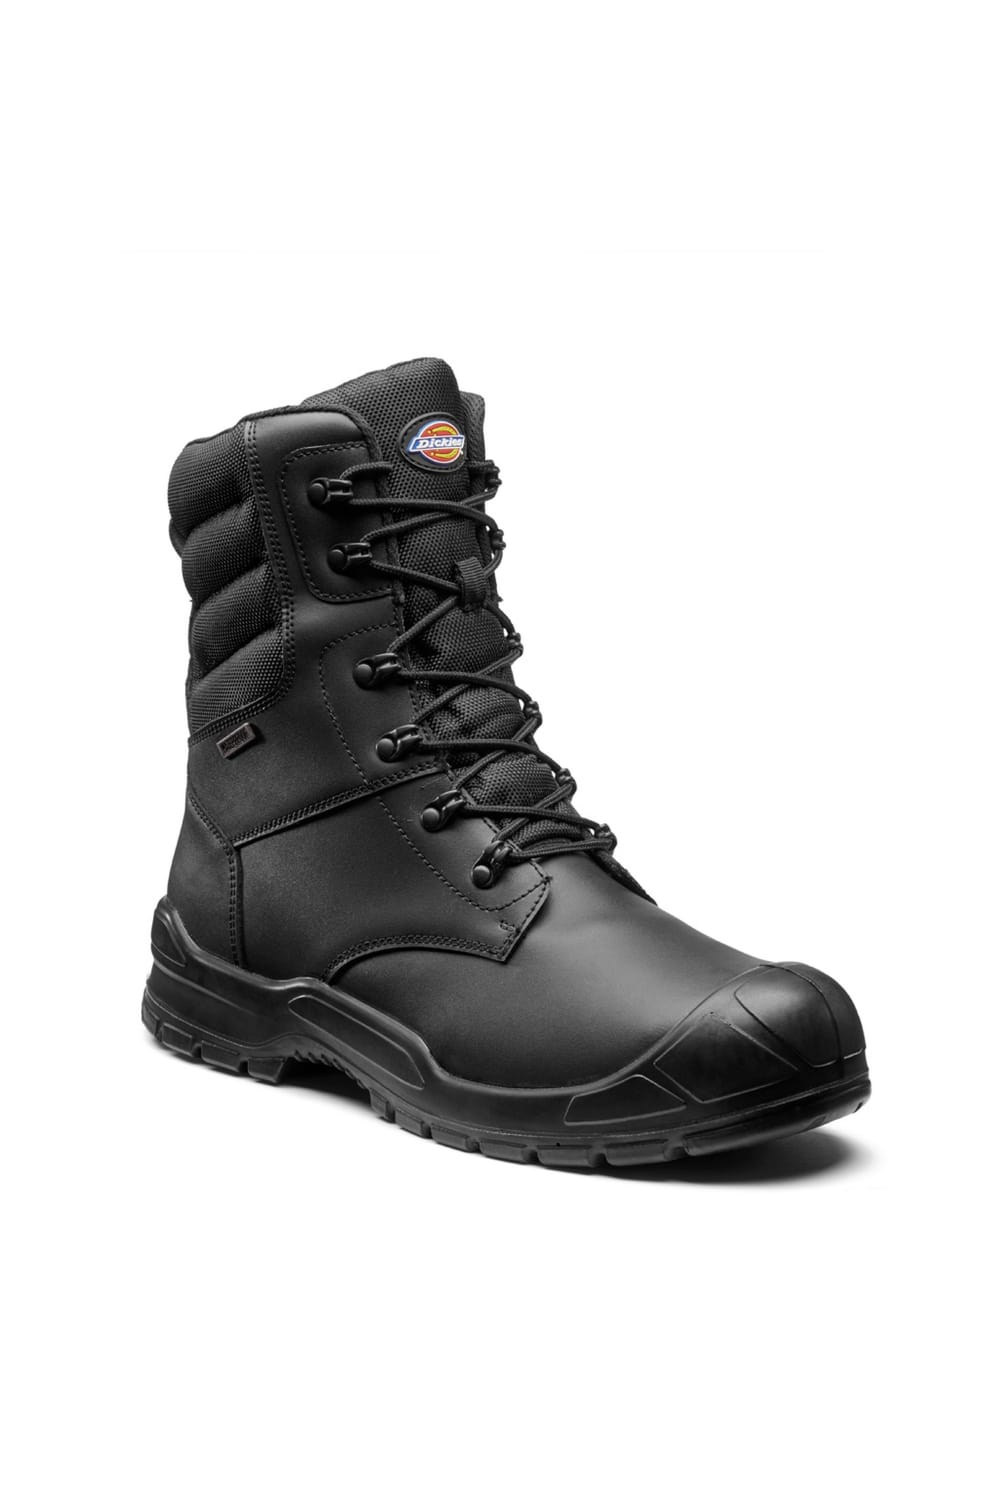 Mens Trenton Pro Safety Boots - Black